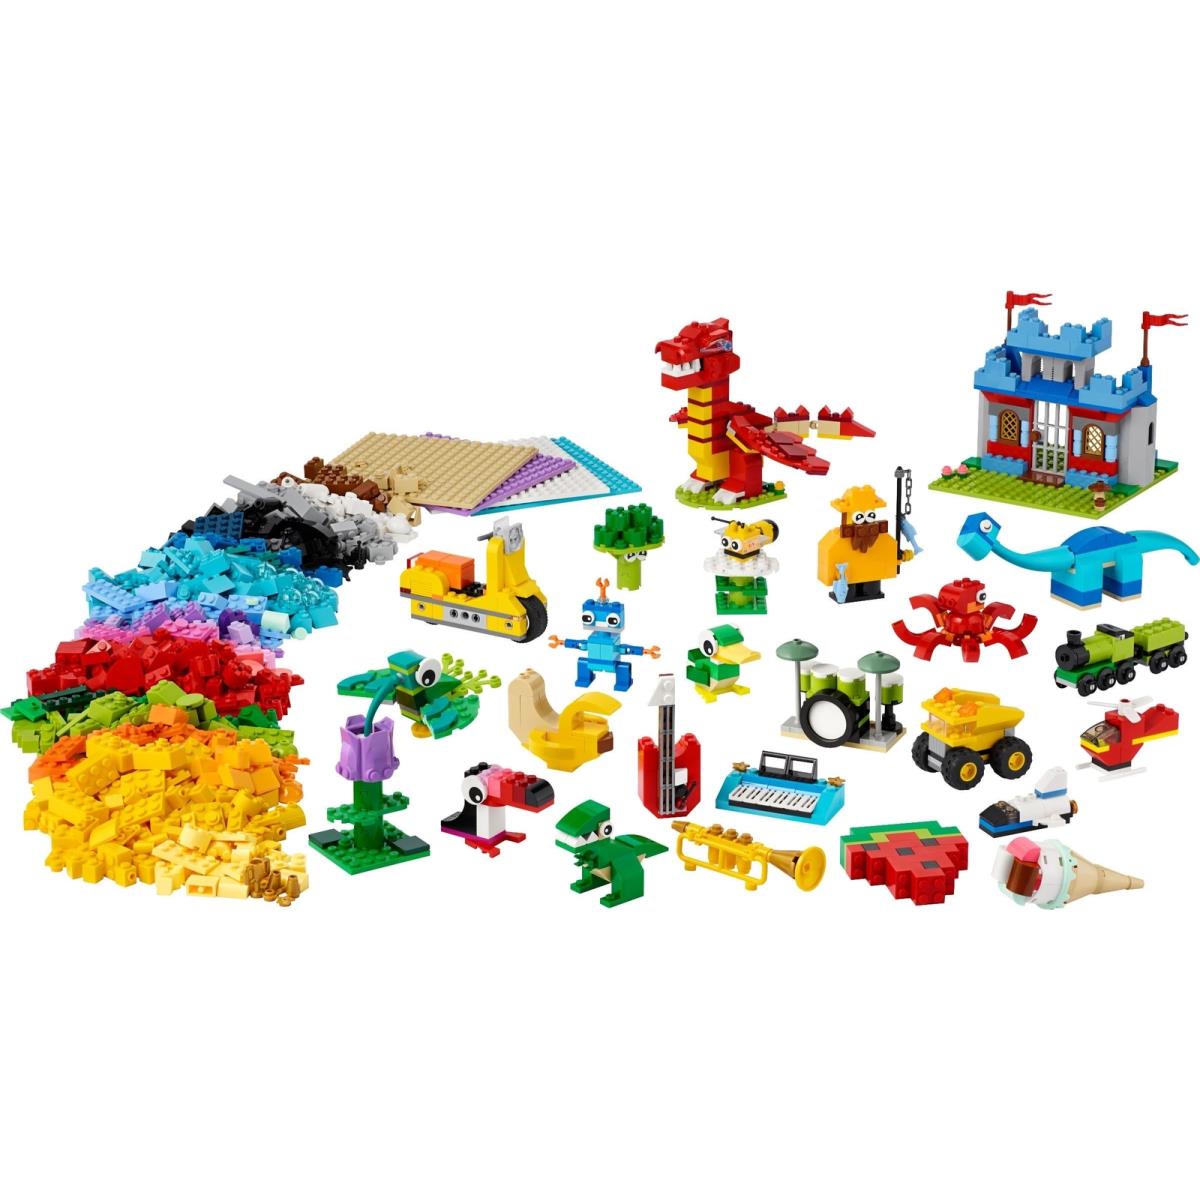 Lego Creator 11020 Build Together - NO Box